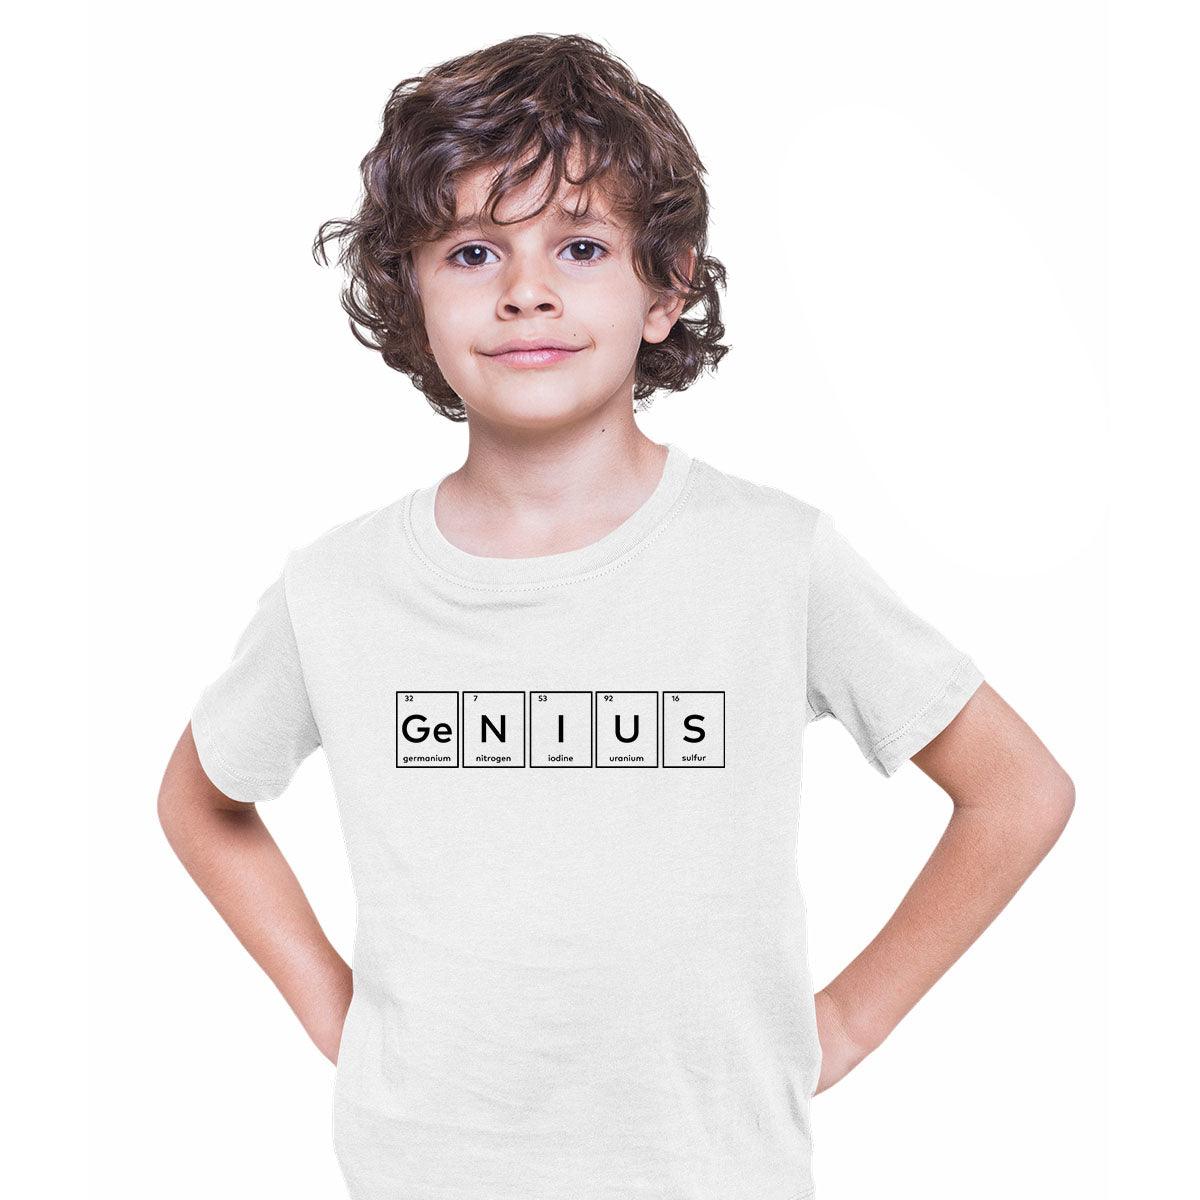 Genius Kids Funny T-Shirt Novelty Joke Tee Rude Gift Him Dad Birthday Slogan T-shirt for Kids - Kuzi Tees